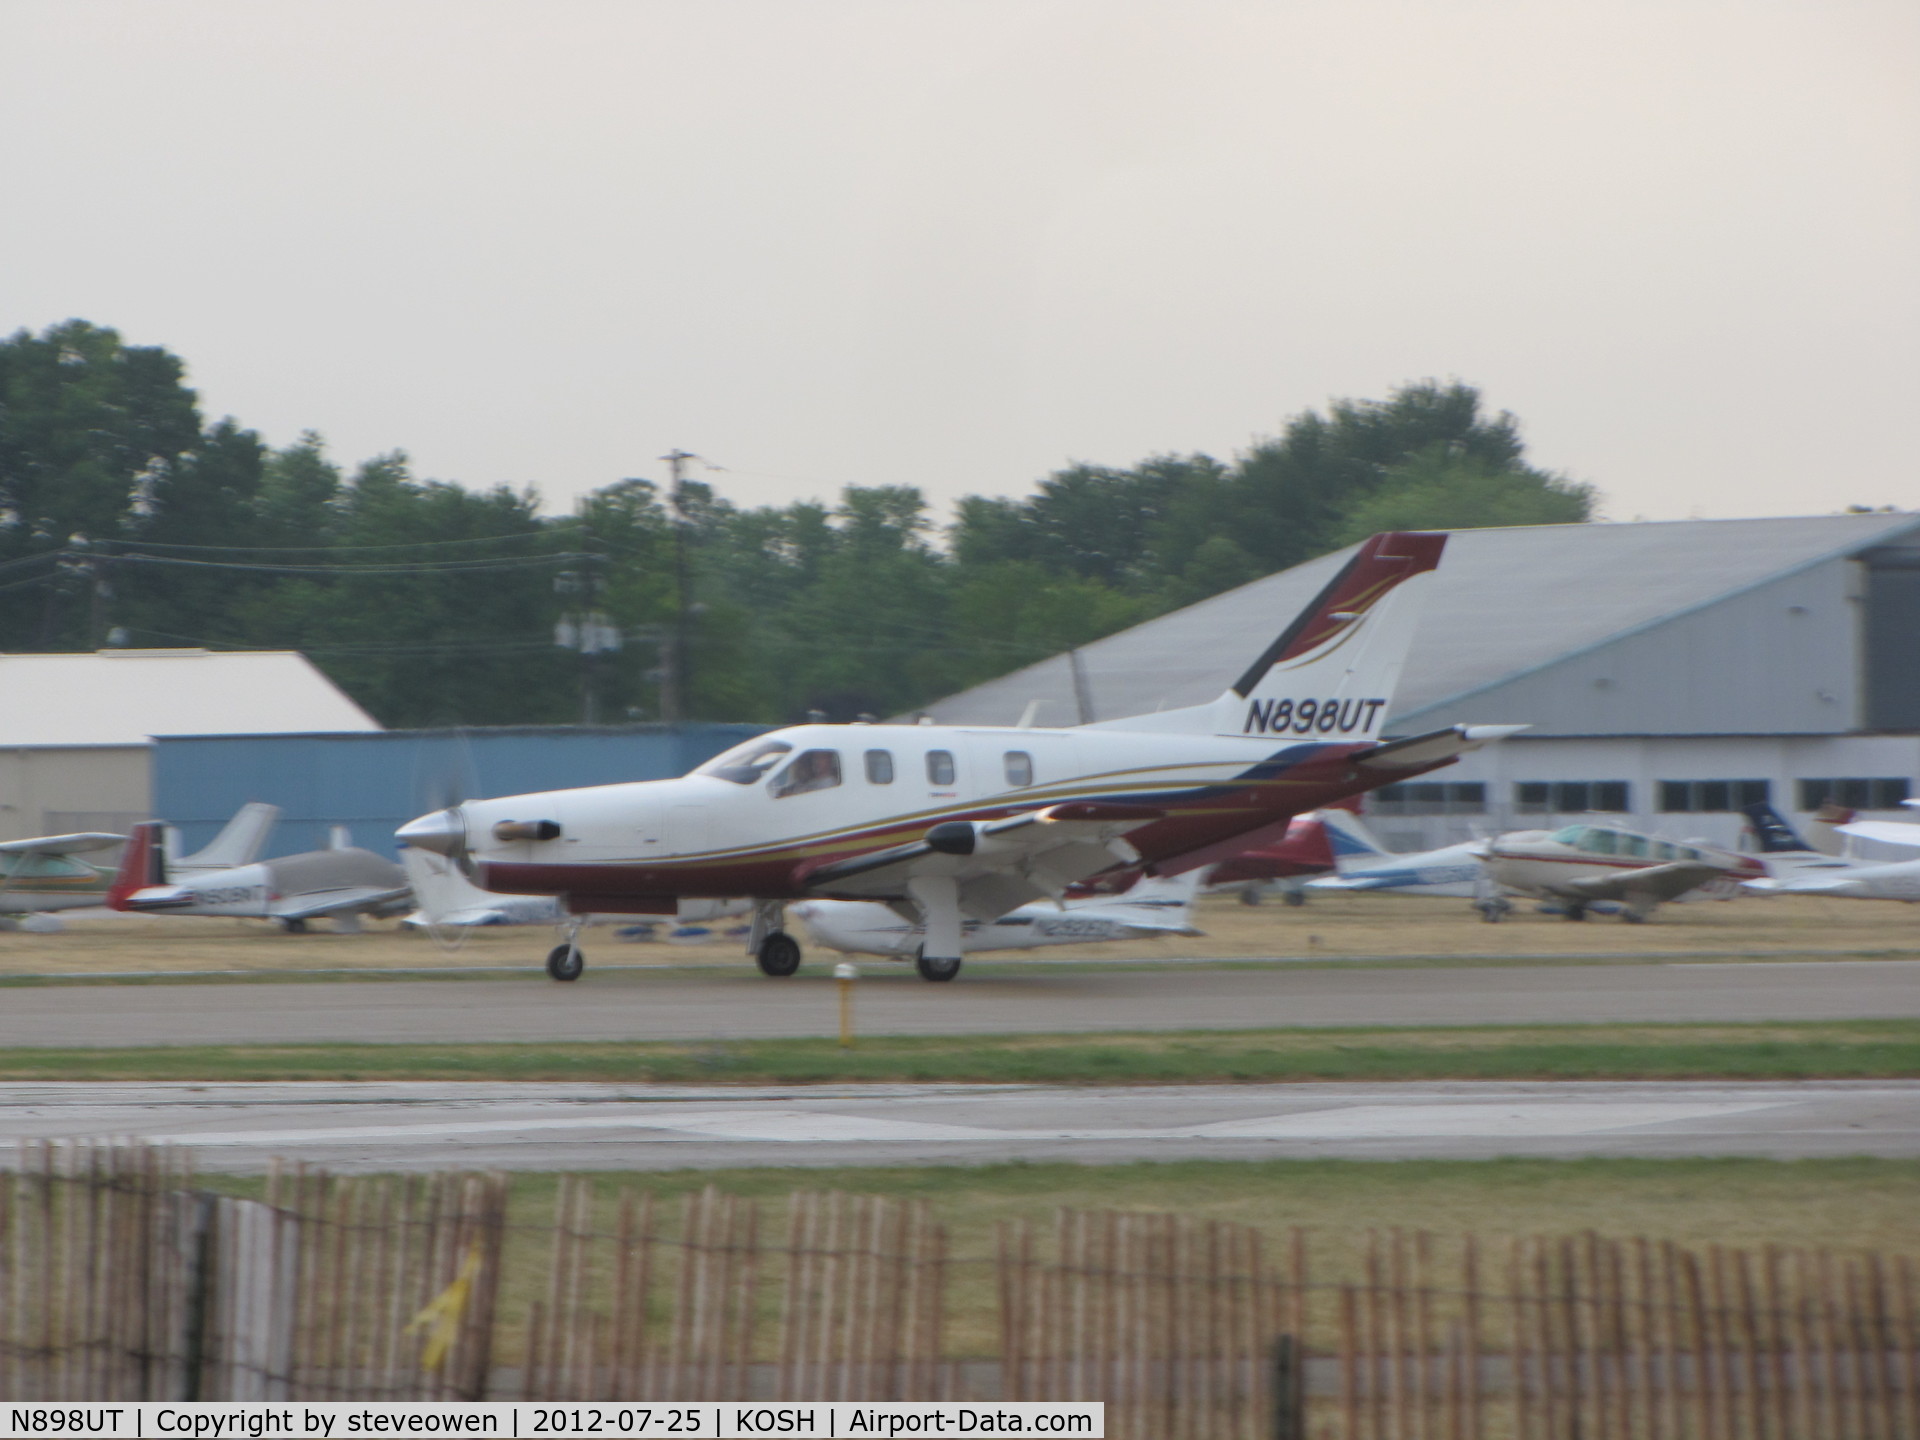 N898UT, 2009 Socata TBM-700 C/N 525, landing on Rwy27